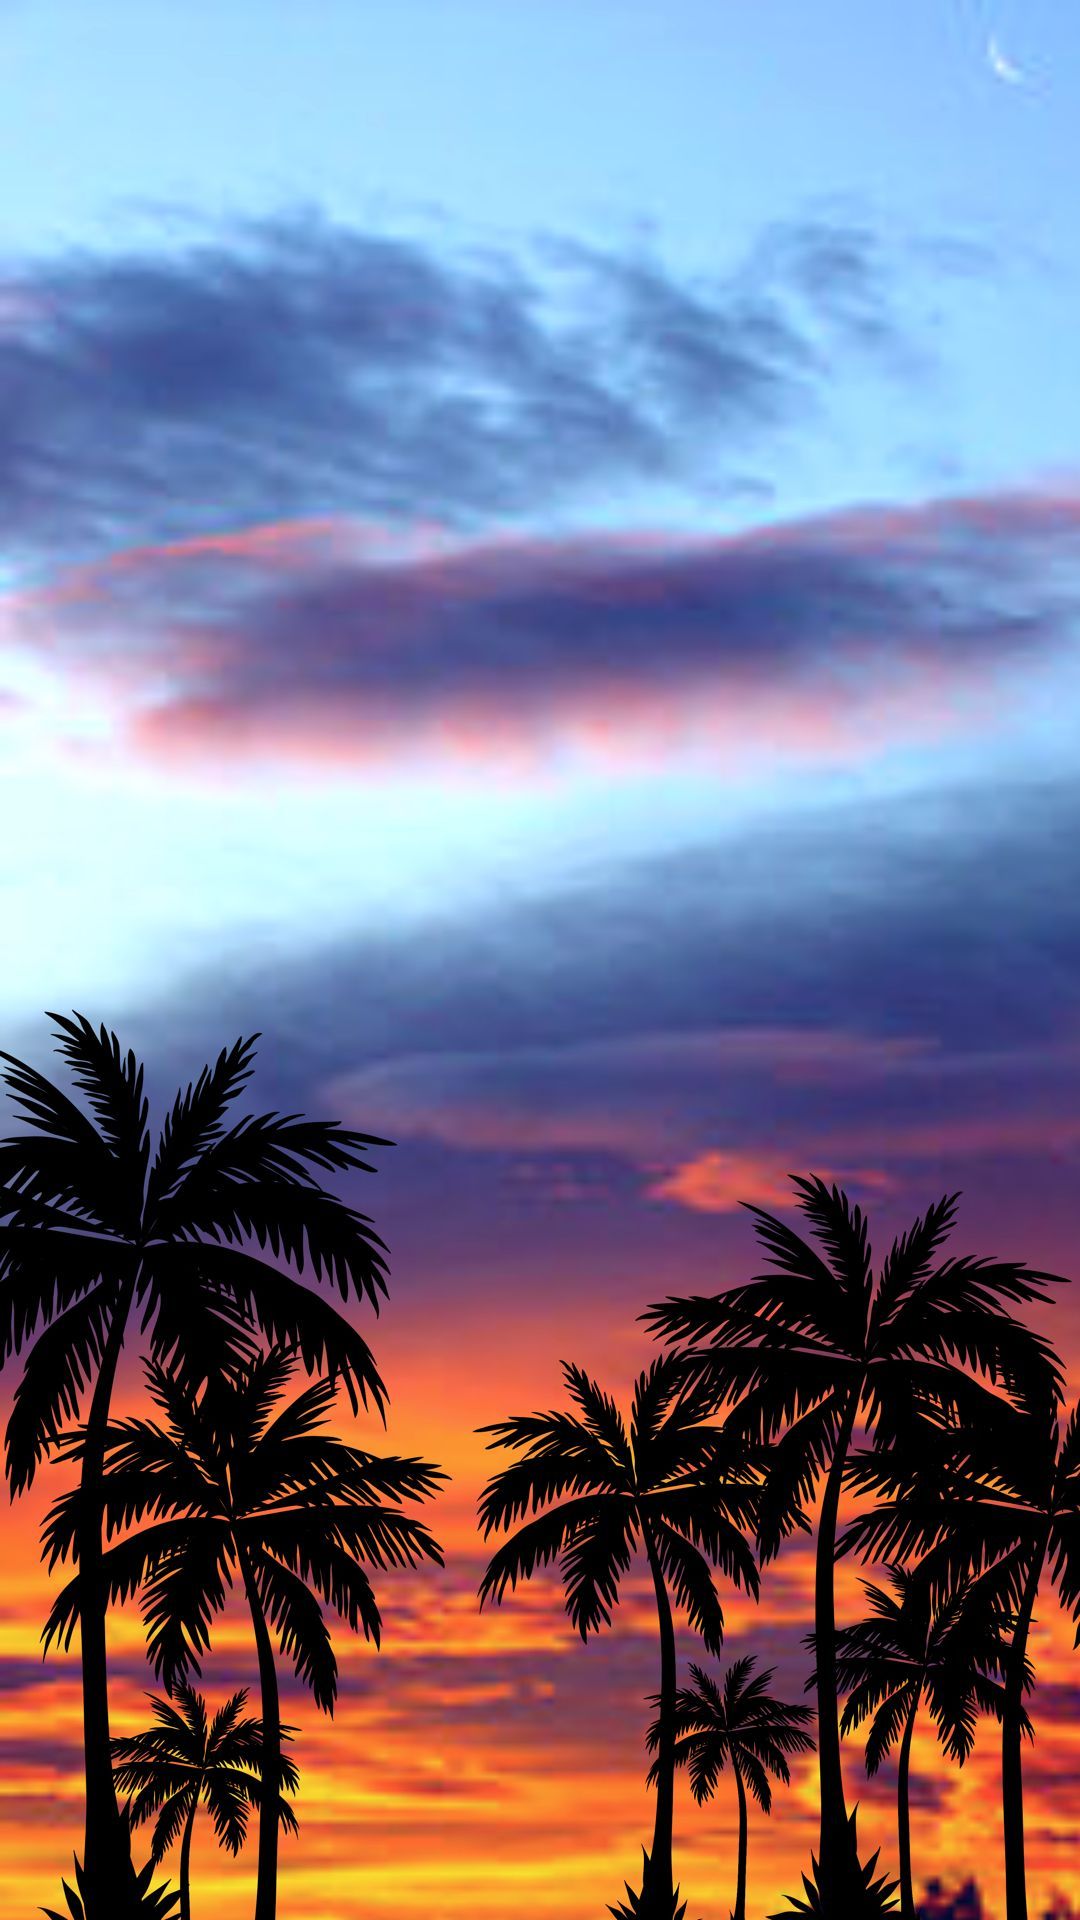 Aesthetic iPhone Wallpaper. Beach sunset wallpaper, Sunset wallpaper, Girl iphone wallpaper